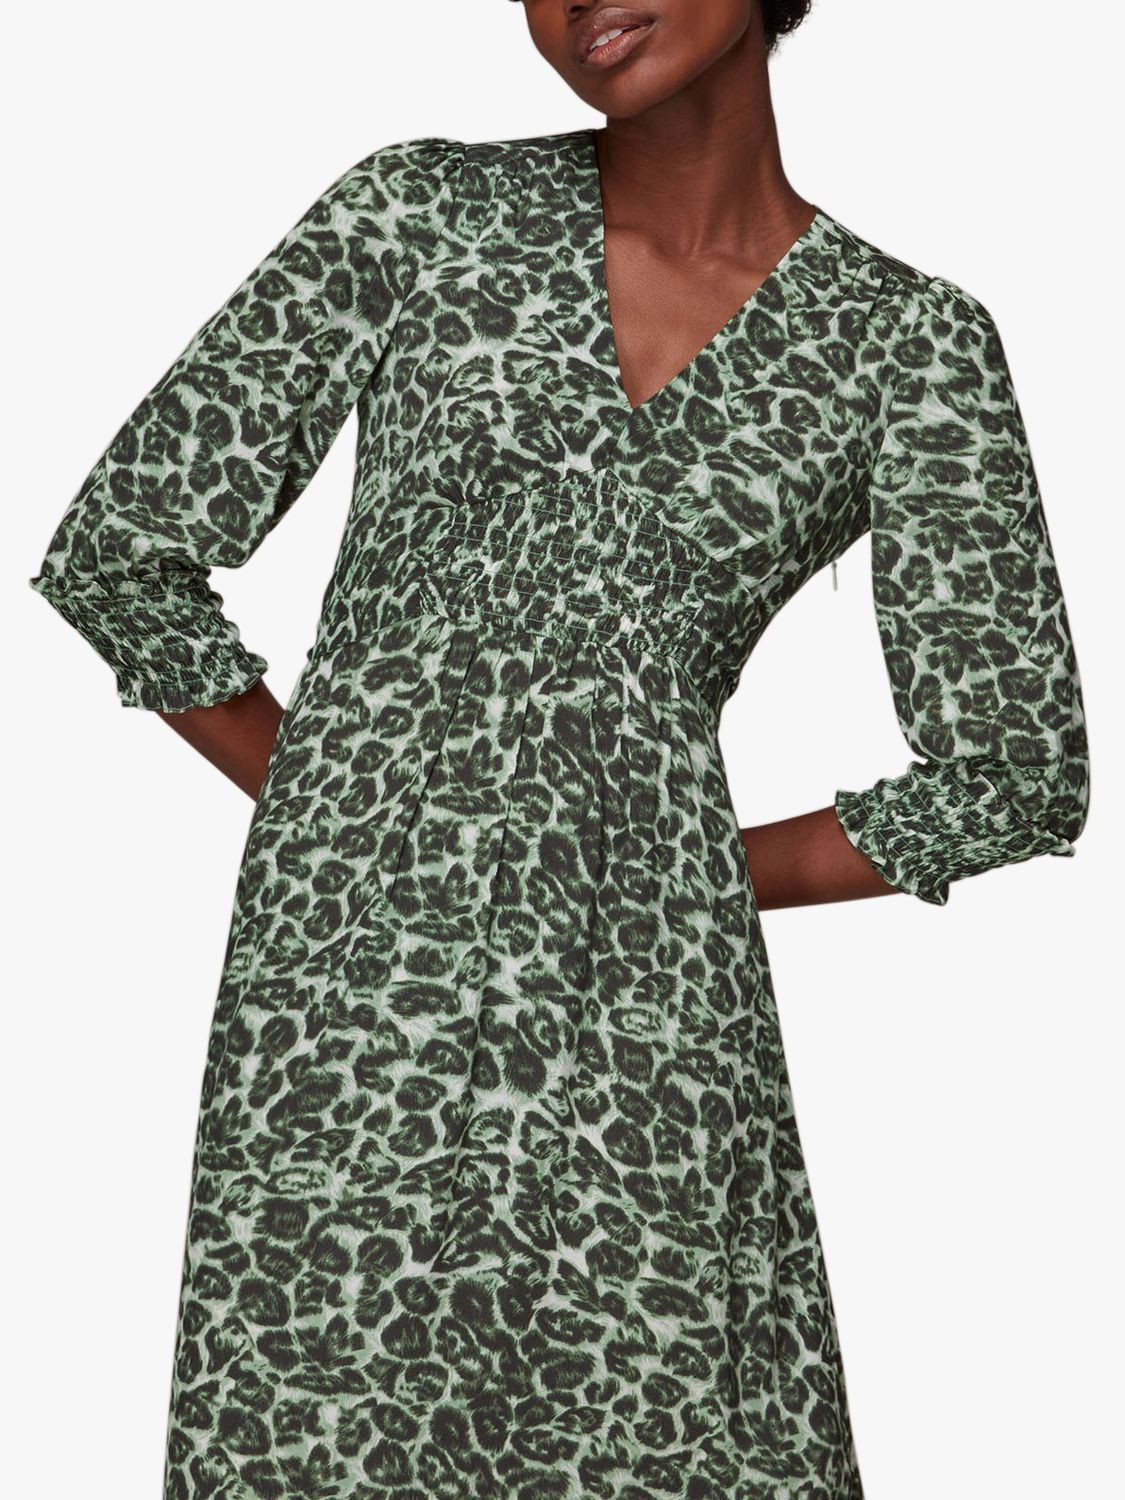 Women's Dresses - Leopard, Green | John ...